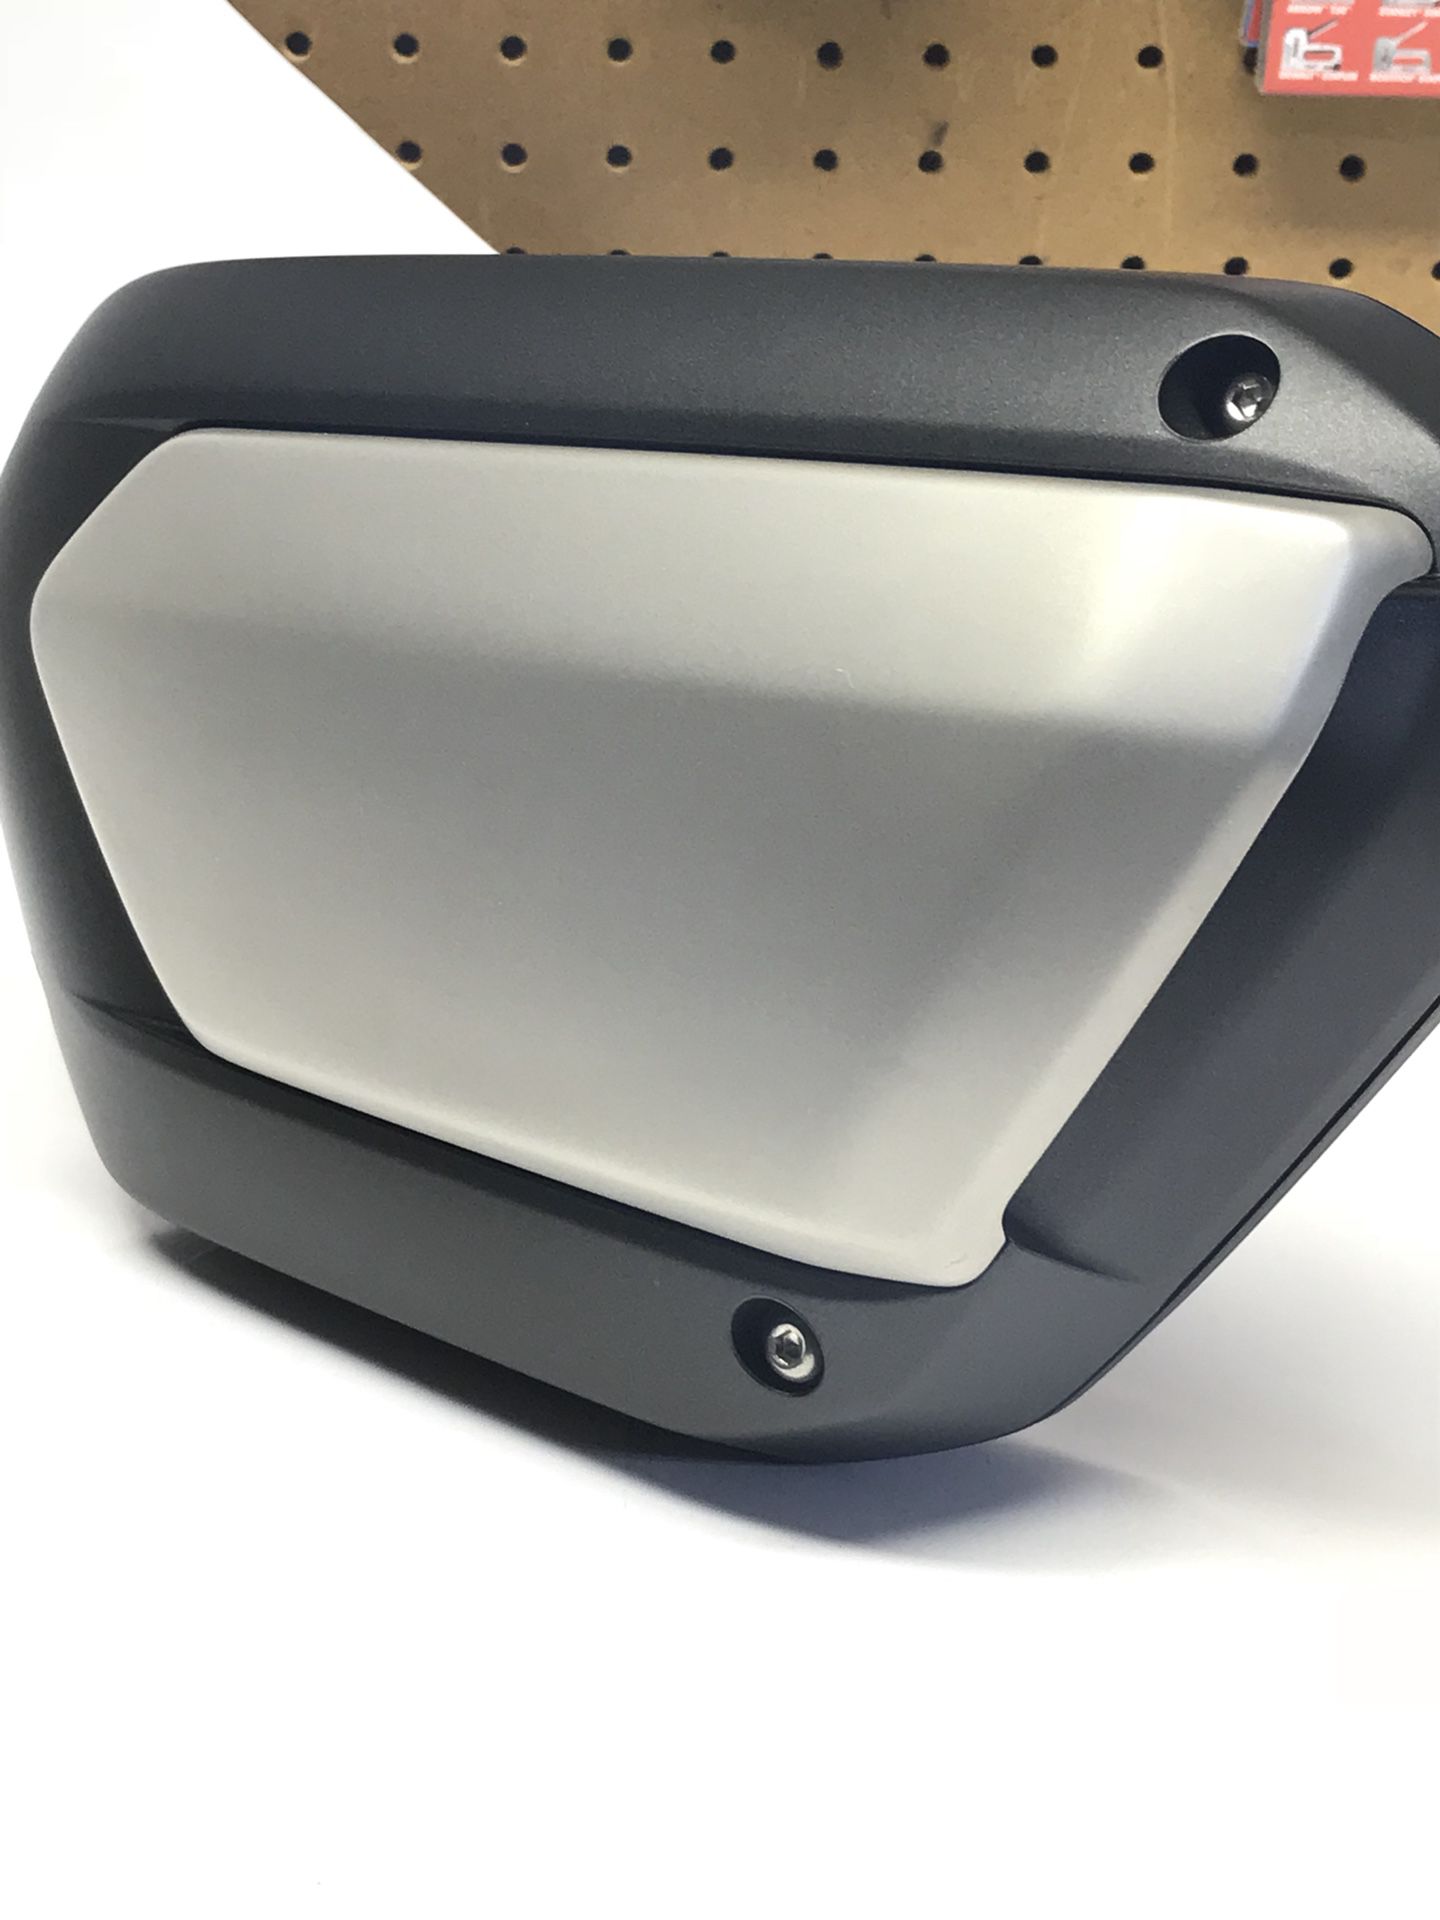 Air filter for 2017 Yamaha bolt